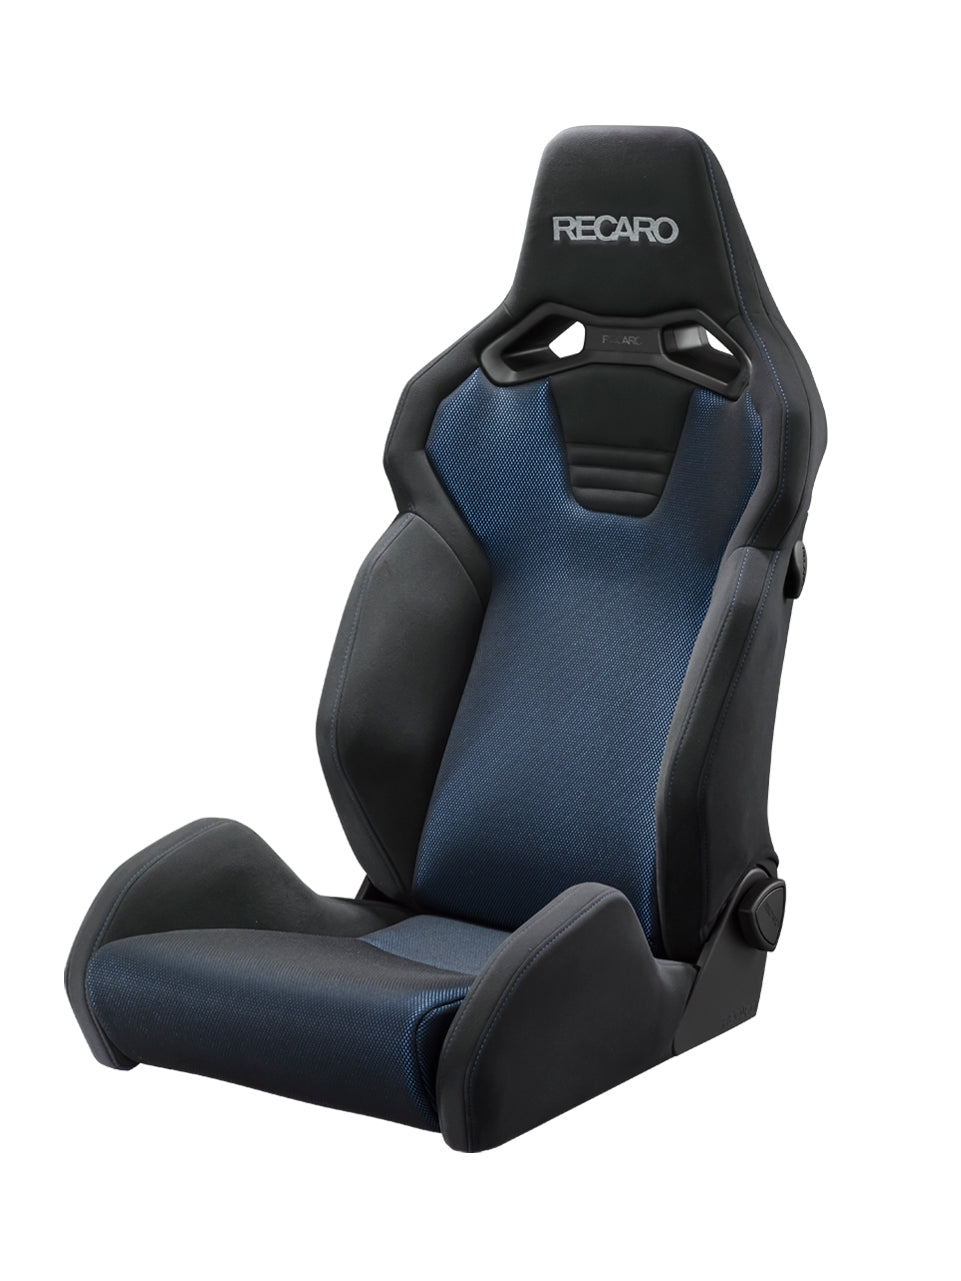 RECARO SR-S BK100 BL BK BRILLIANT MESH BLUE AND BLACK COLOR SEAT 81-120.20.643-0